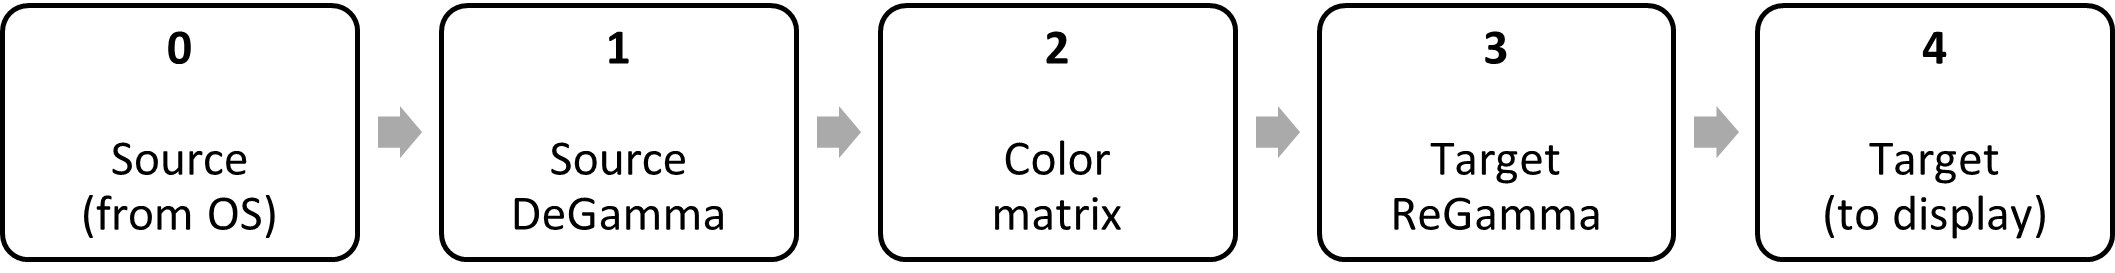 diagram blok: degamma sumber, matriks warna, regamma target